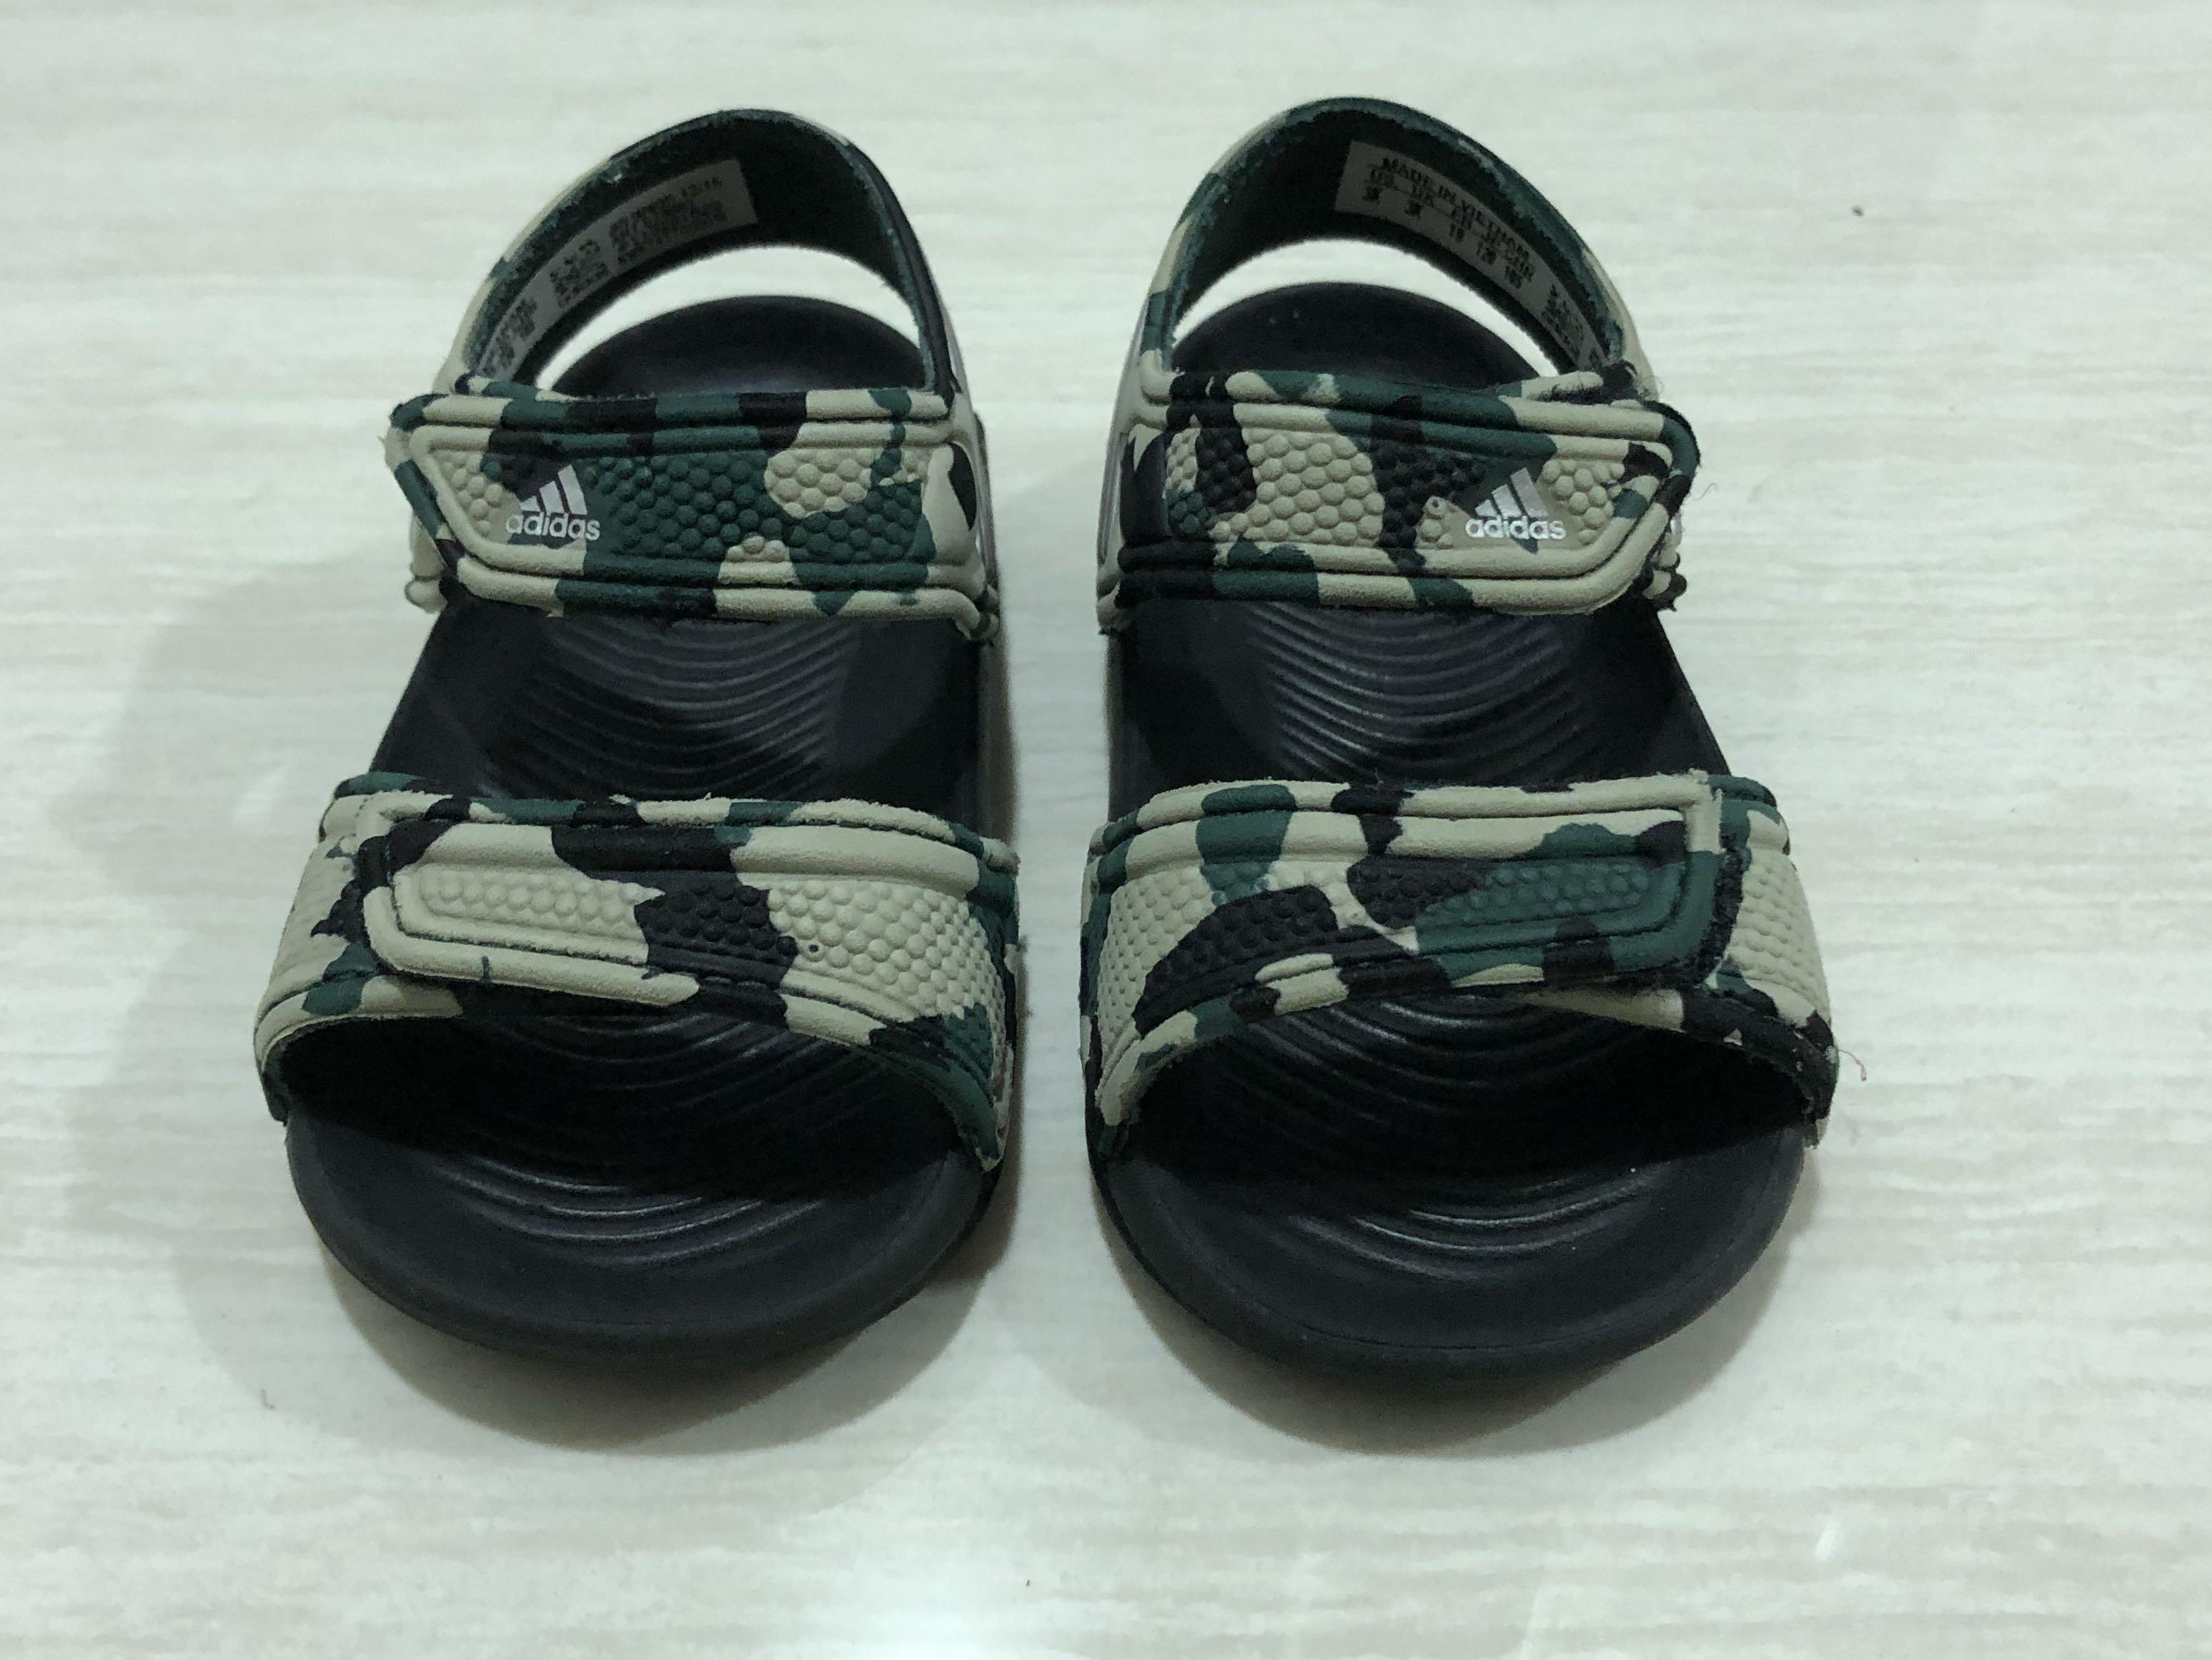 adidas sandals baby